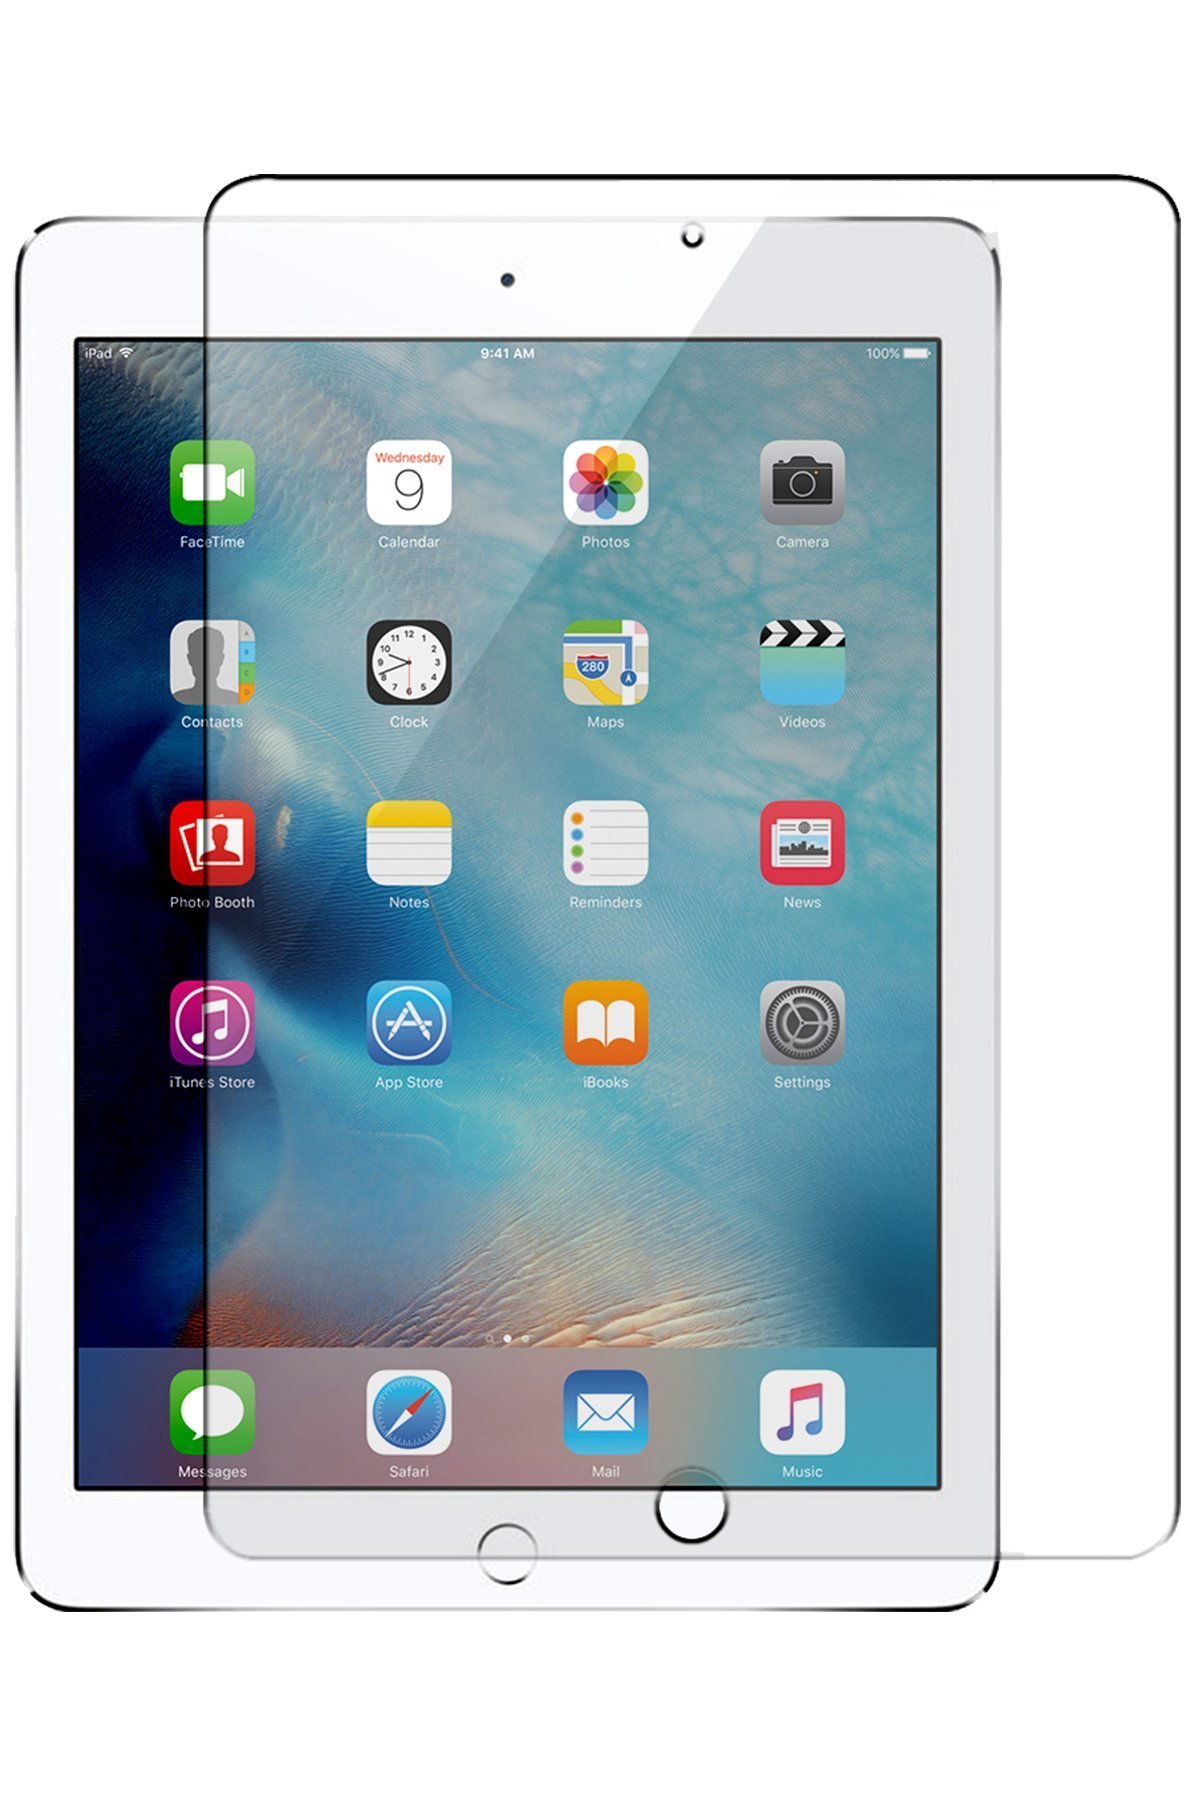 Newface iPad Pro 12.9 (2020) Kılıf Starling 360 Kalemlikli Tablet Kılıf - Mavi